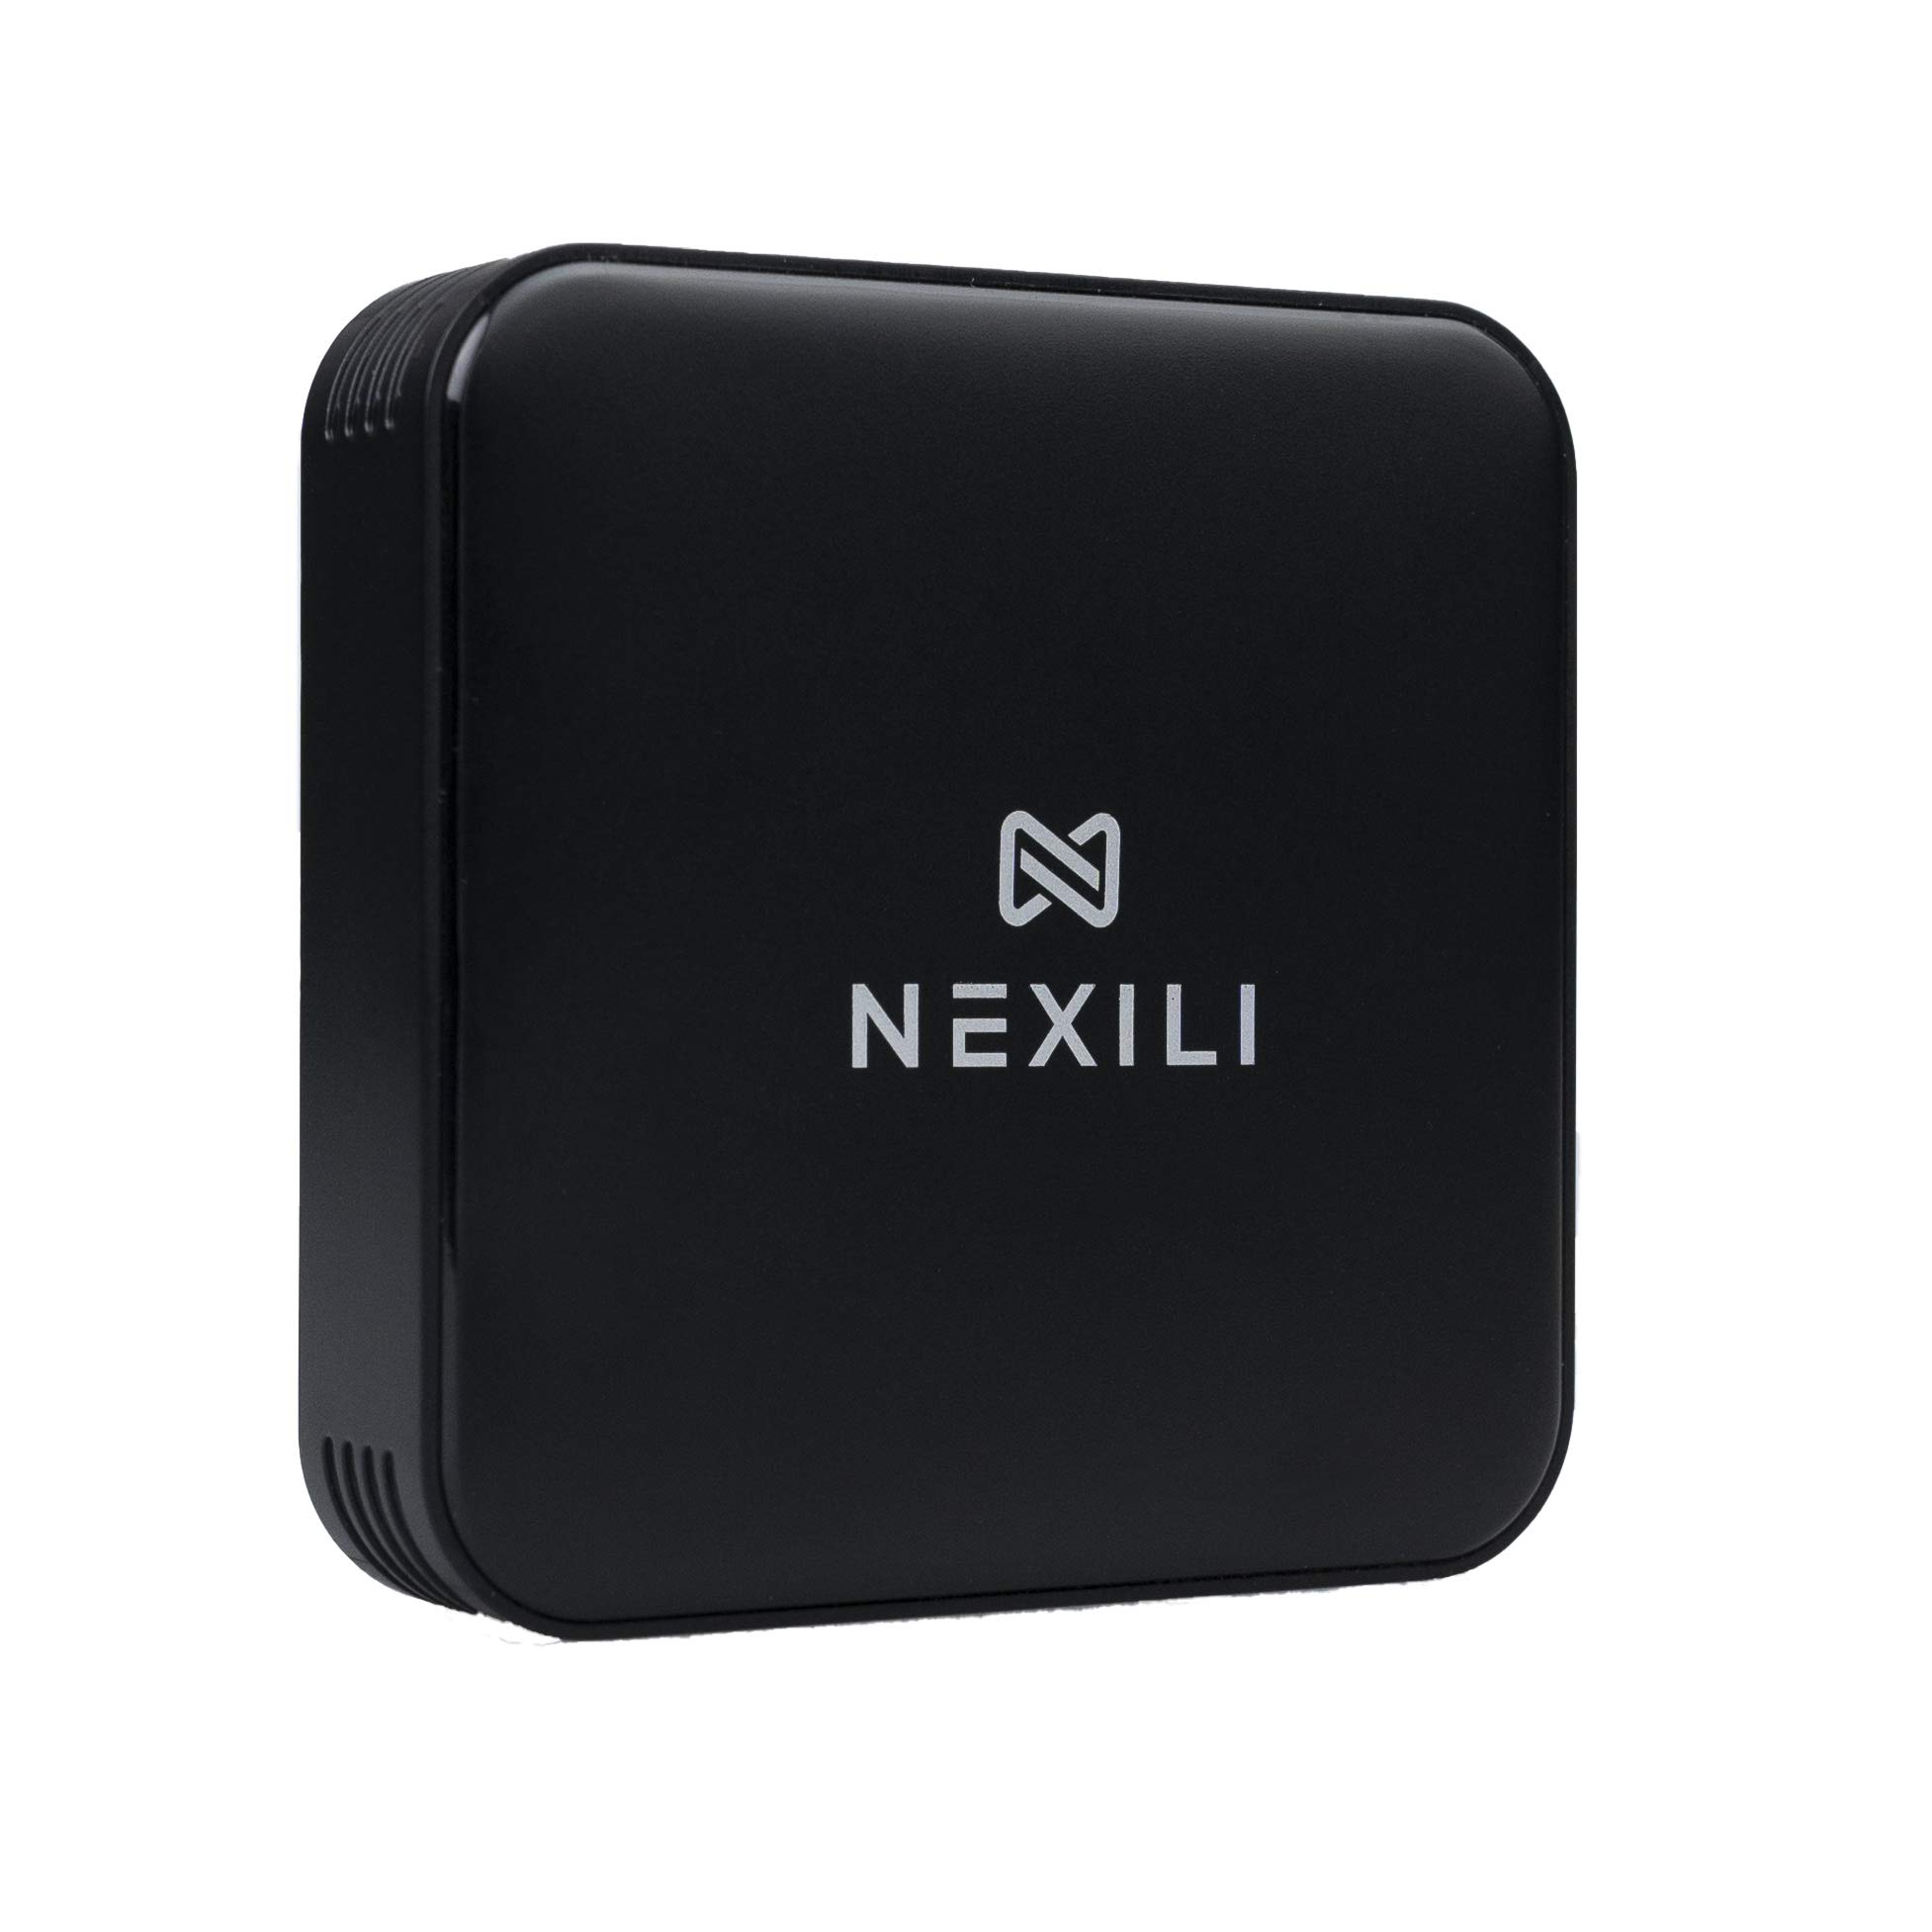 Nexili Virta Capture Card for Cameras - 4K30 Input 1080p60 Output, Live Stream with Your DSLR, Camcorder or Action cam, External Webcam, USB 3.1